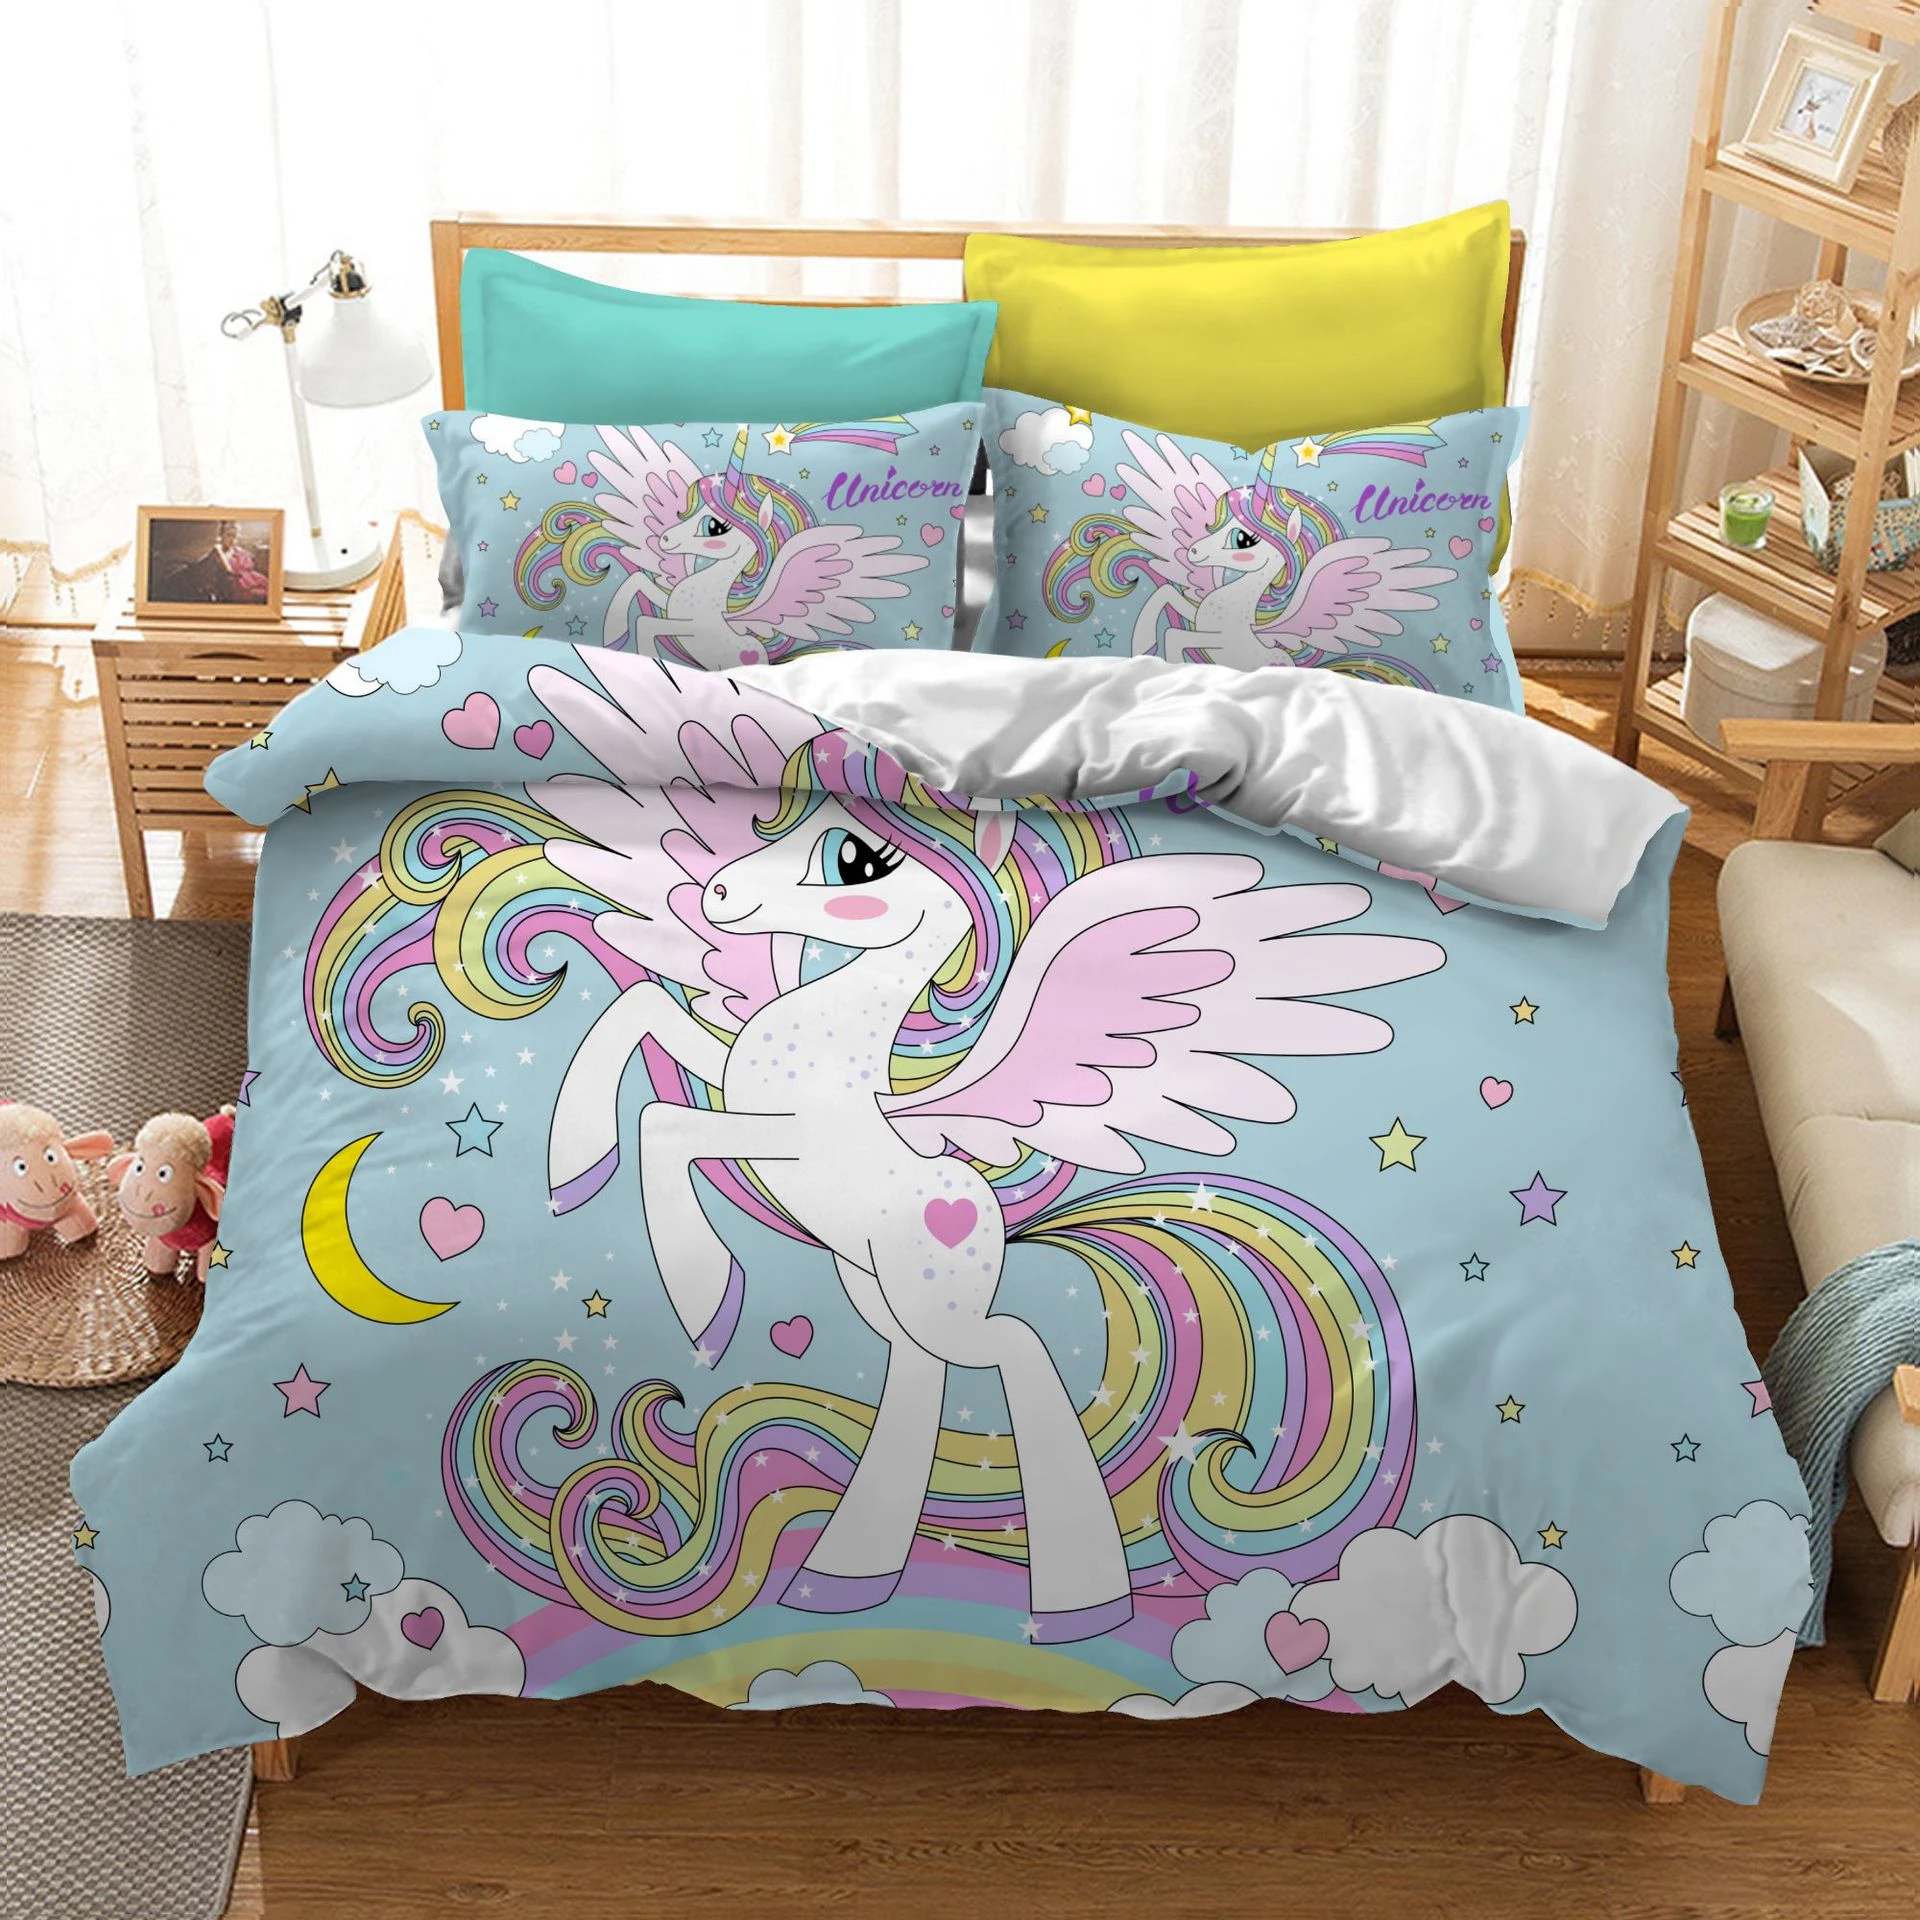 Ropa de cama de unicornio arcoíris, bonita funda de edredón, fundas de almohada, juegos de edredón de dibujos animados para niñas, 140x210, juego cama doble individual 7|Juegos de ropa de cama| -